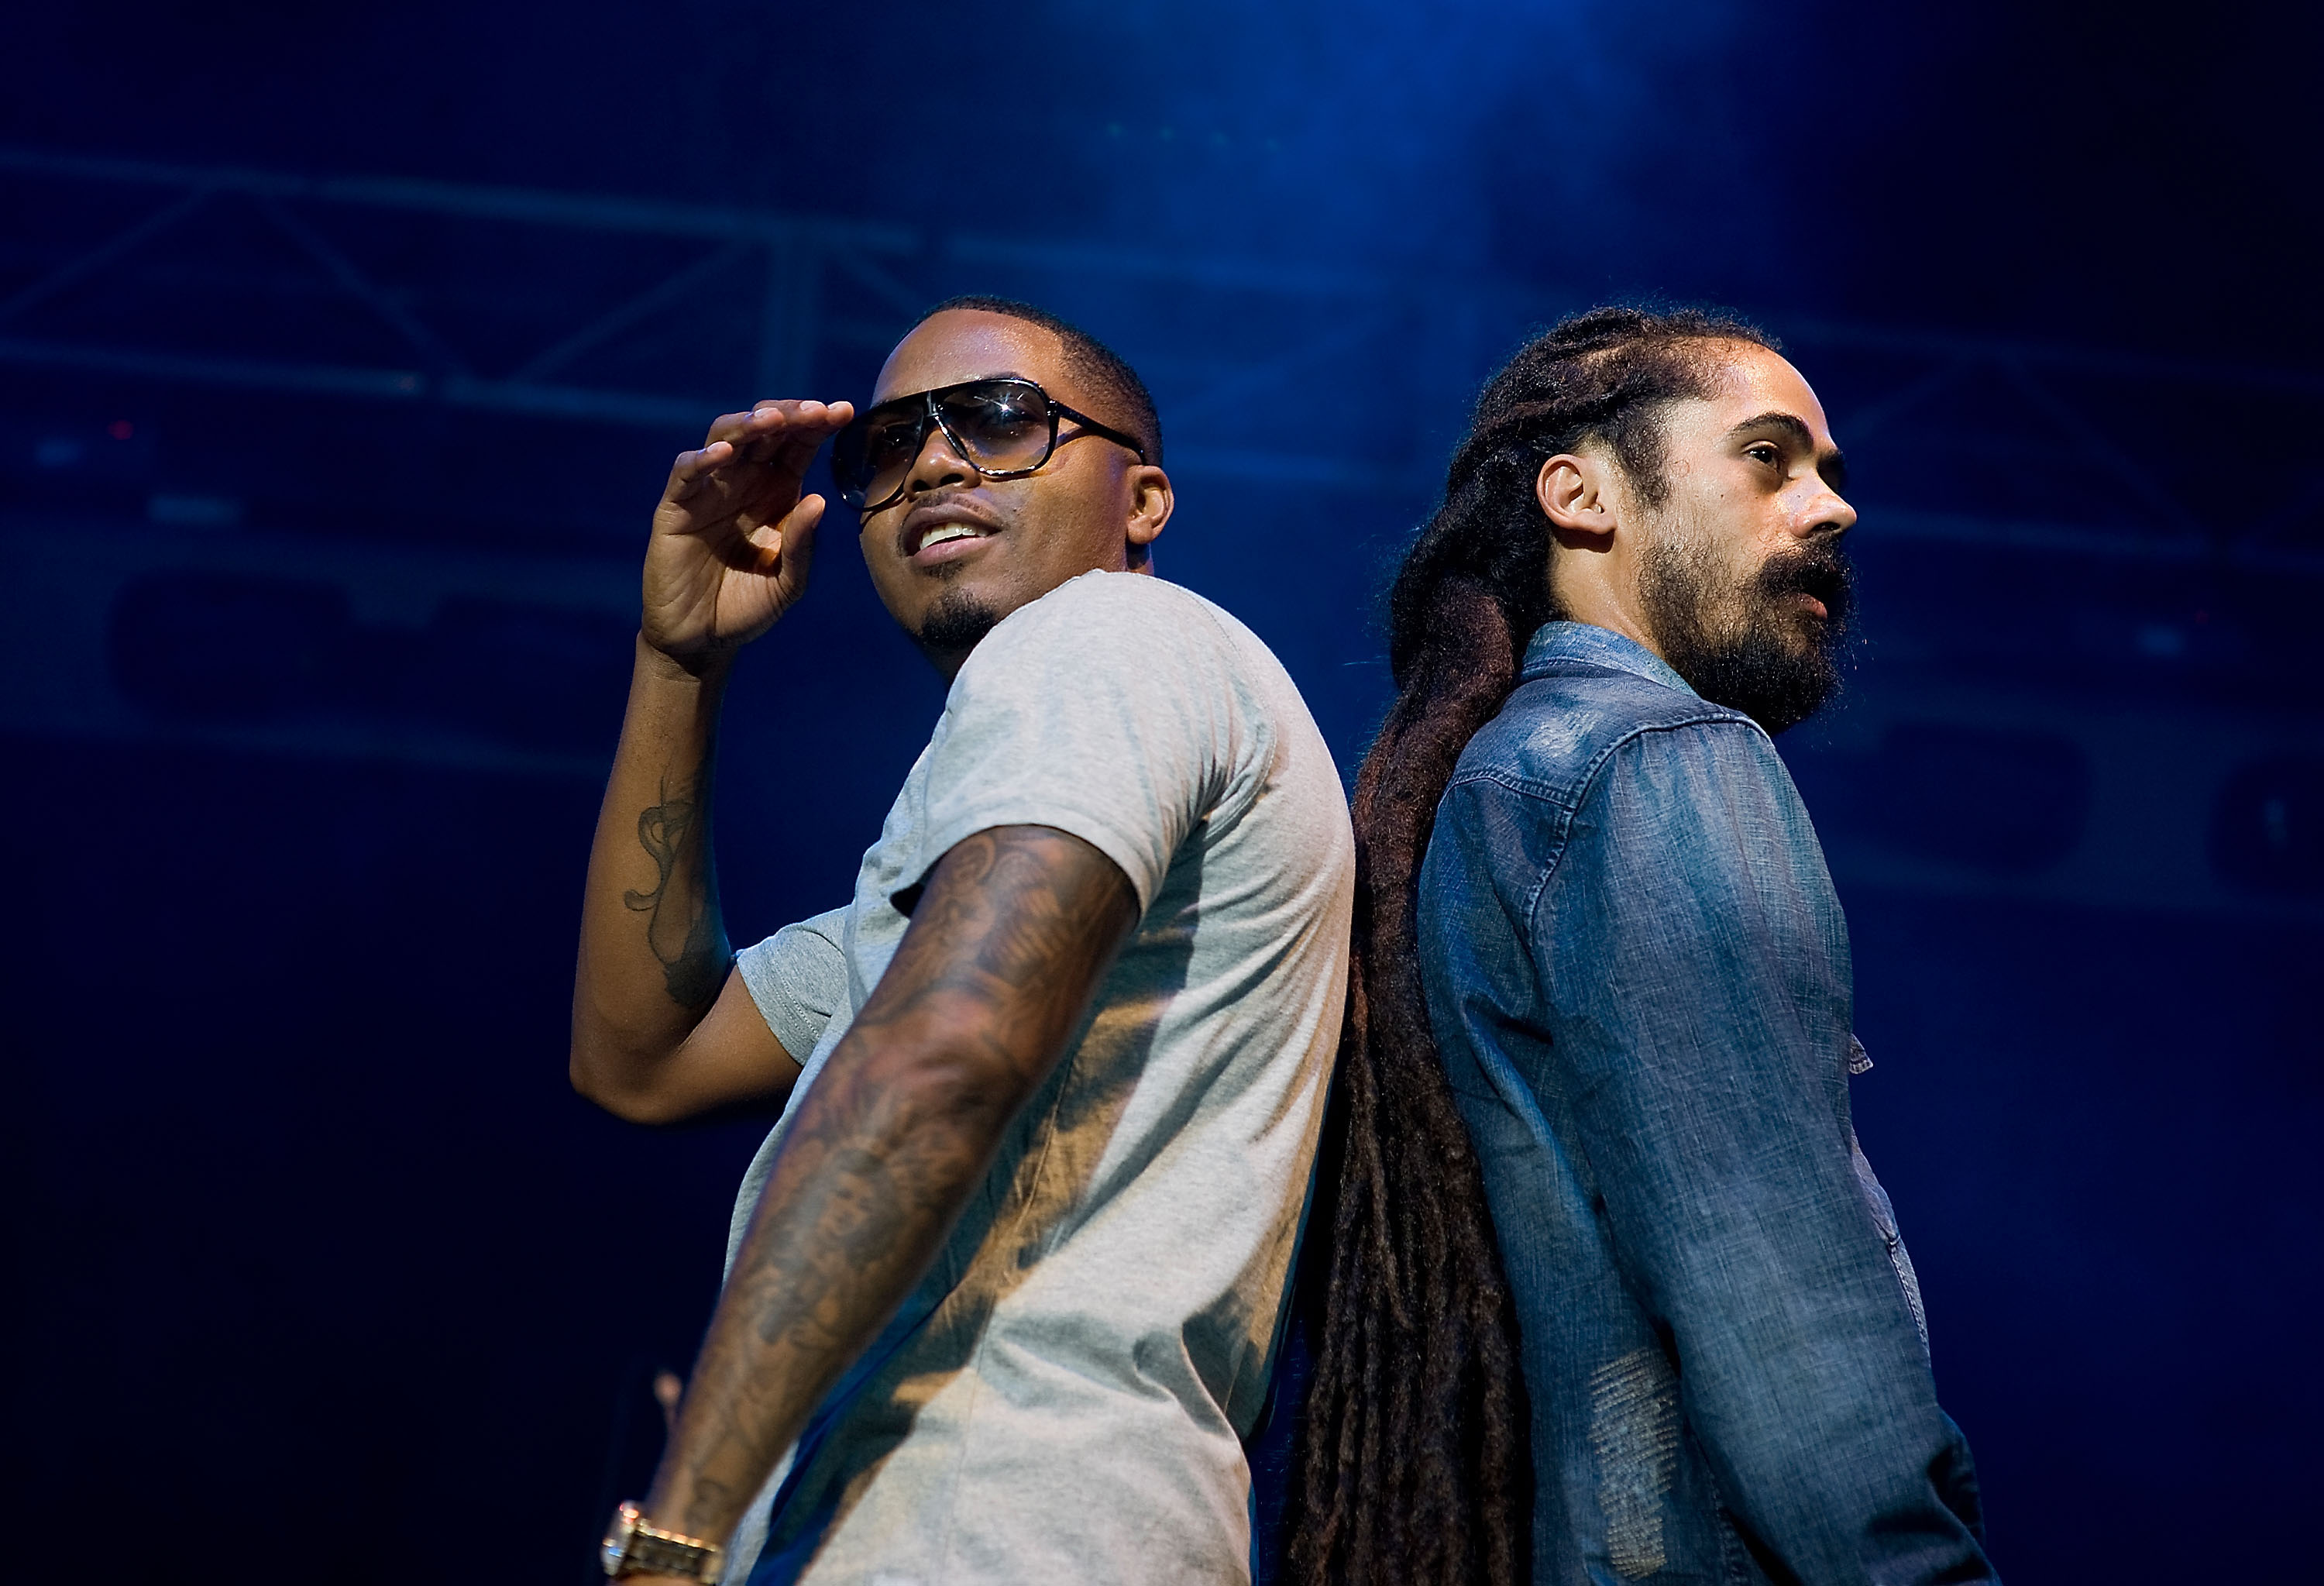 Nas & Damian Marley - Distant Relatives Lyrics and Tracklist